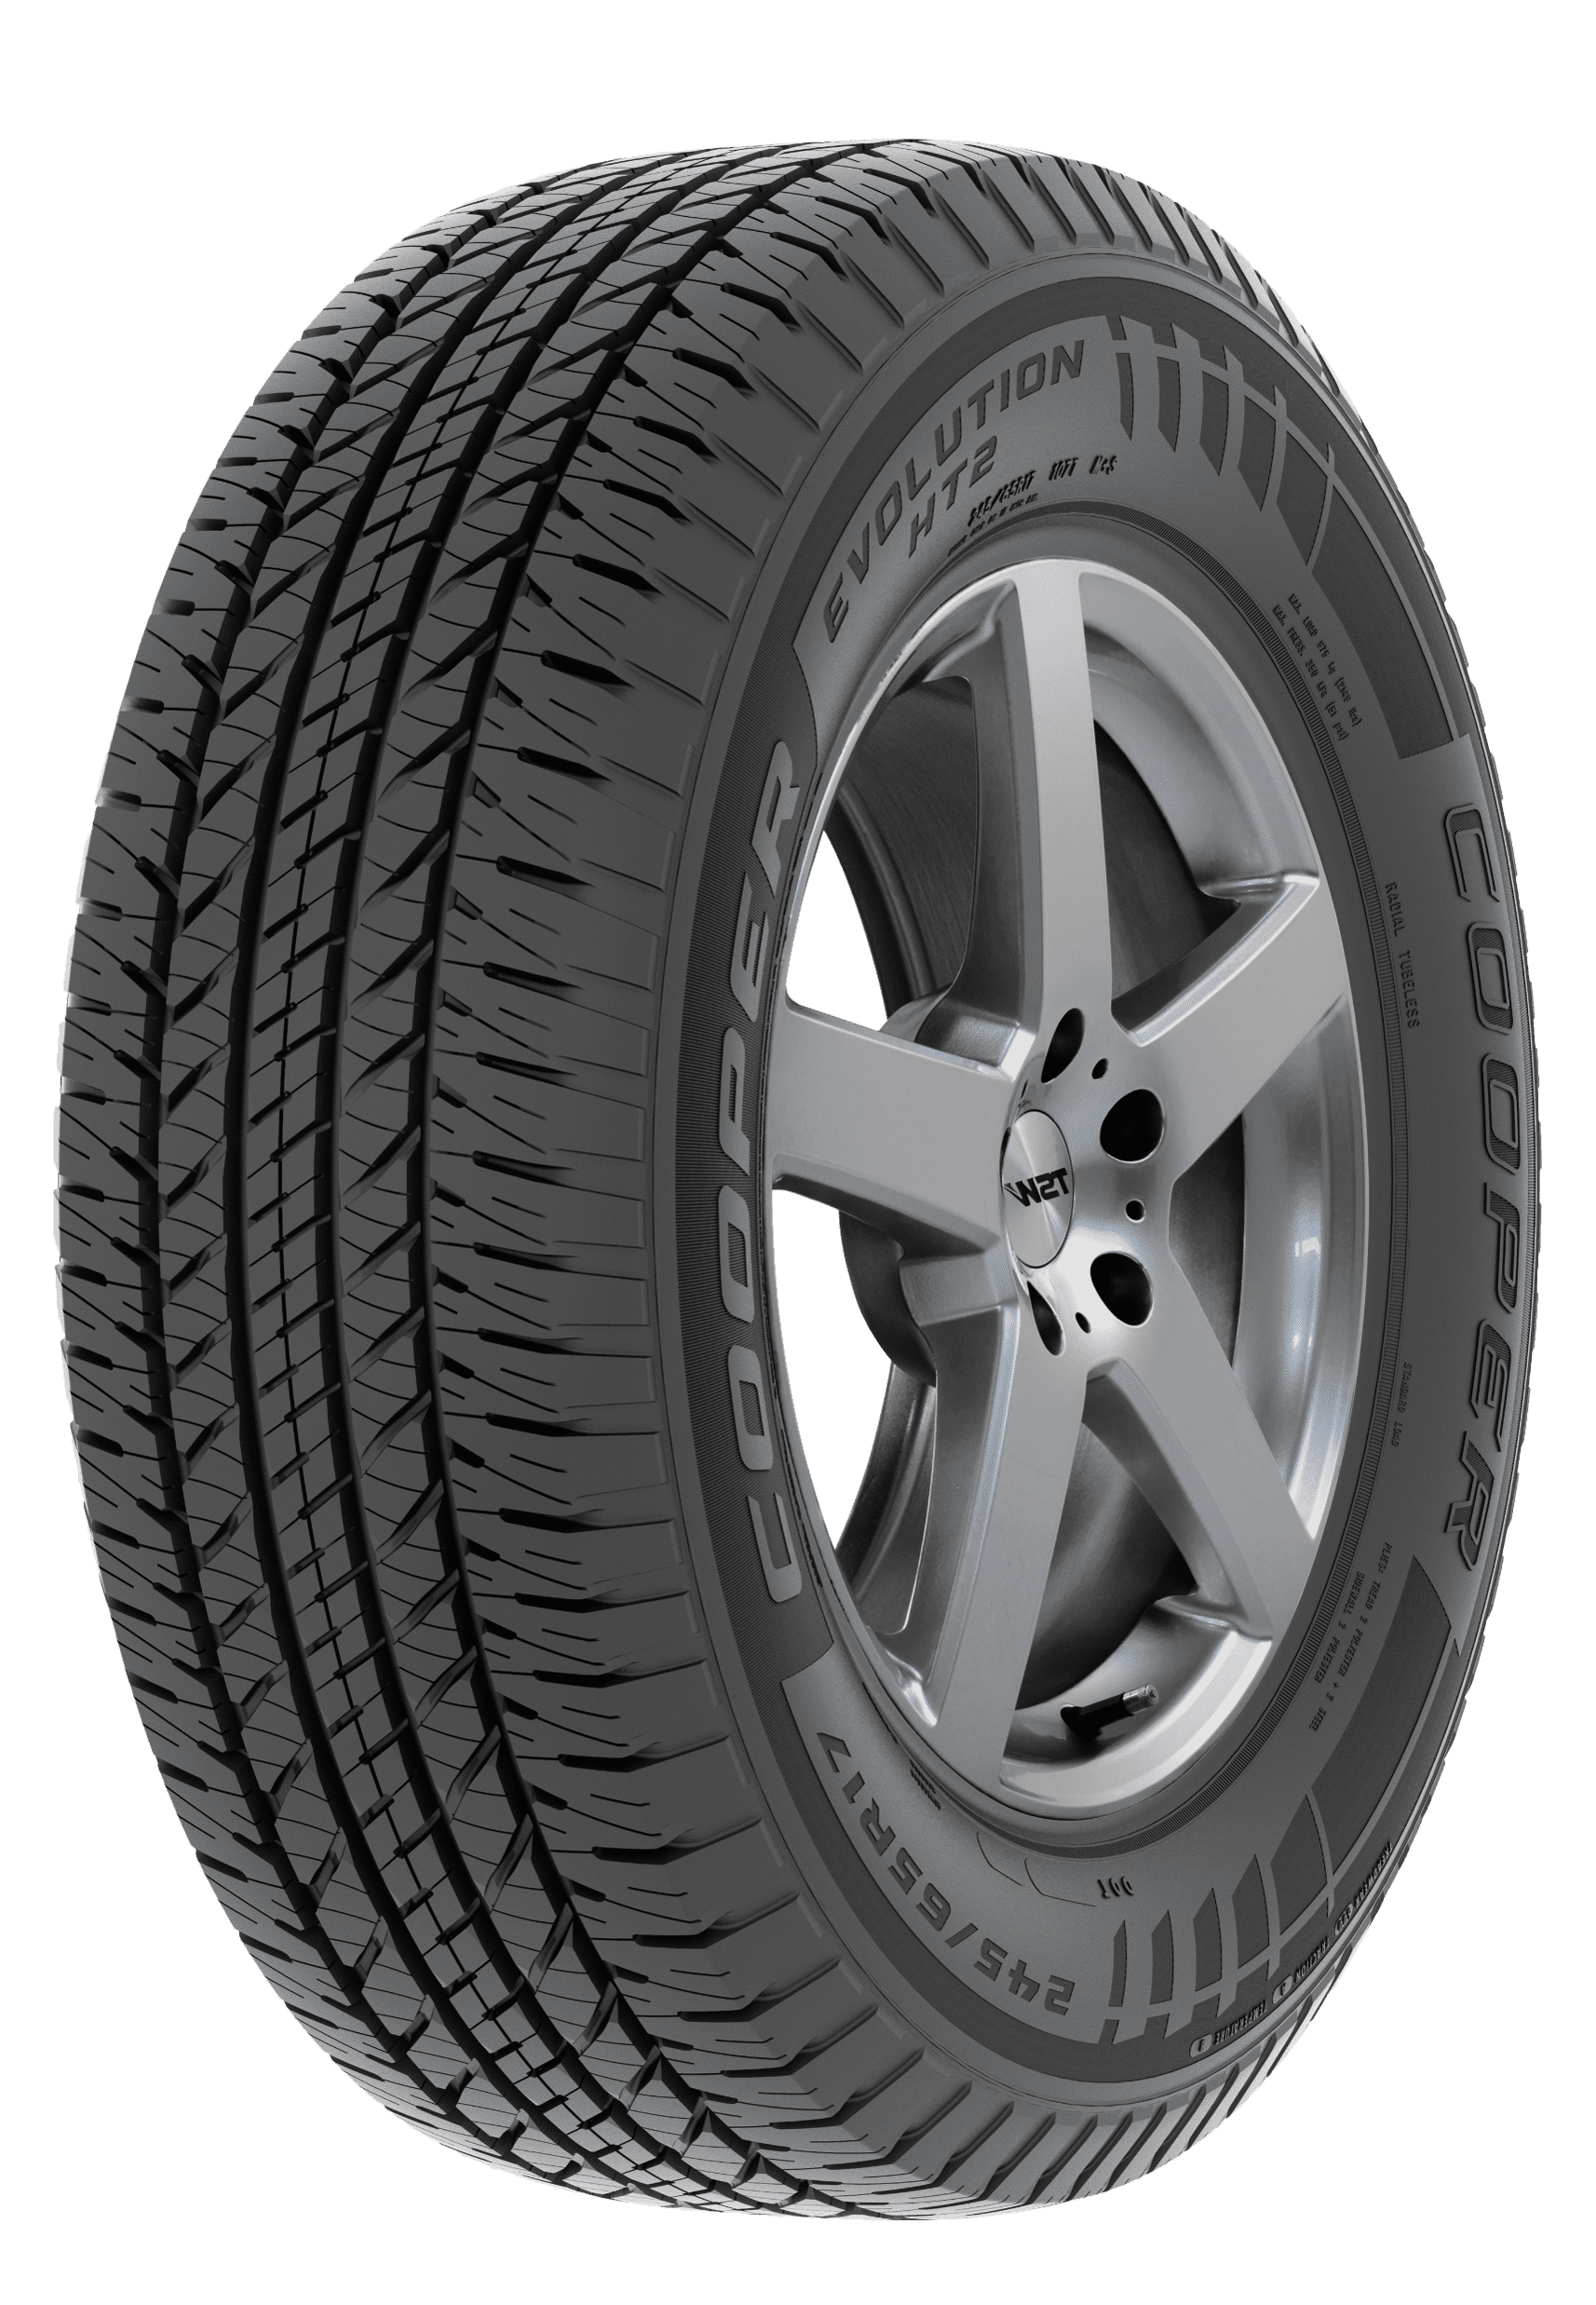 GT Radial Kia Winterpro HP (2 Tires) 205/45R17XL Hyundai GLS, 88V Fits: Accent SX 2012-17 BSW Champiro Rio 2017-18